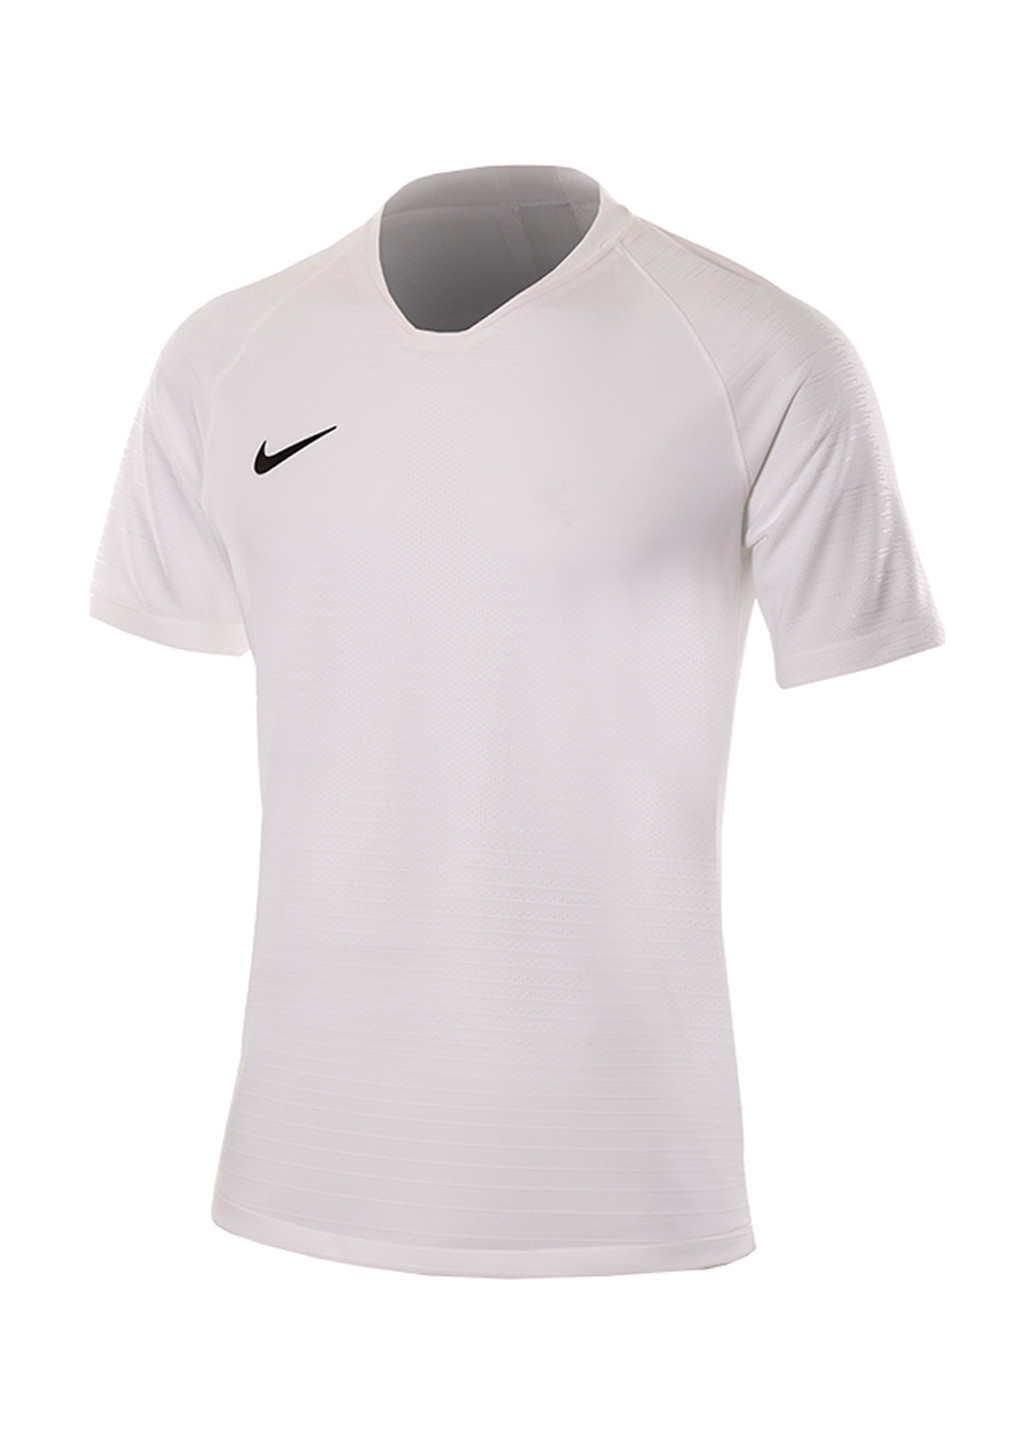 Белая футболка Nike VAPOR KNIT II JERSEY Short Sleeve